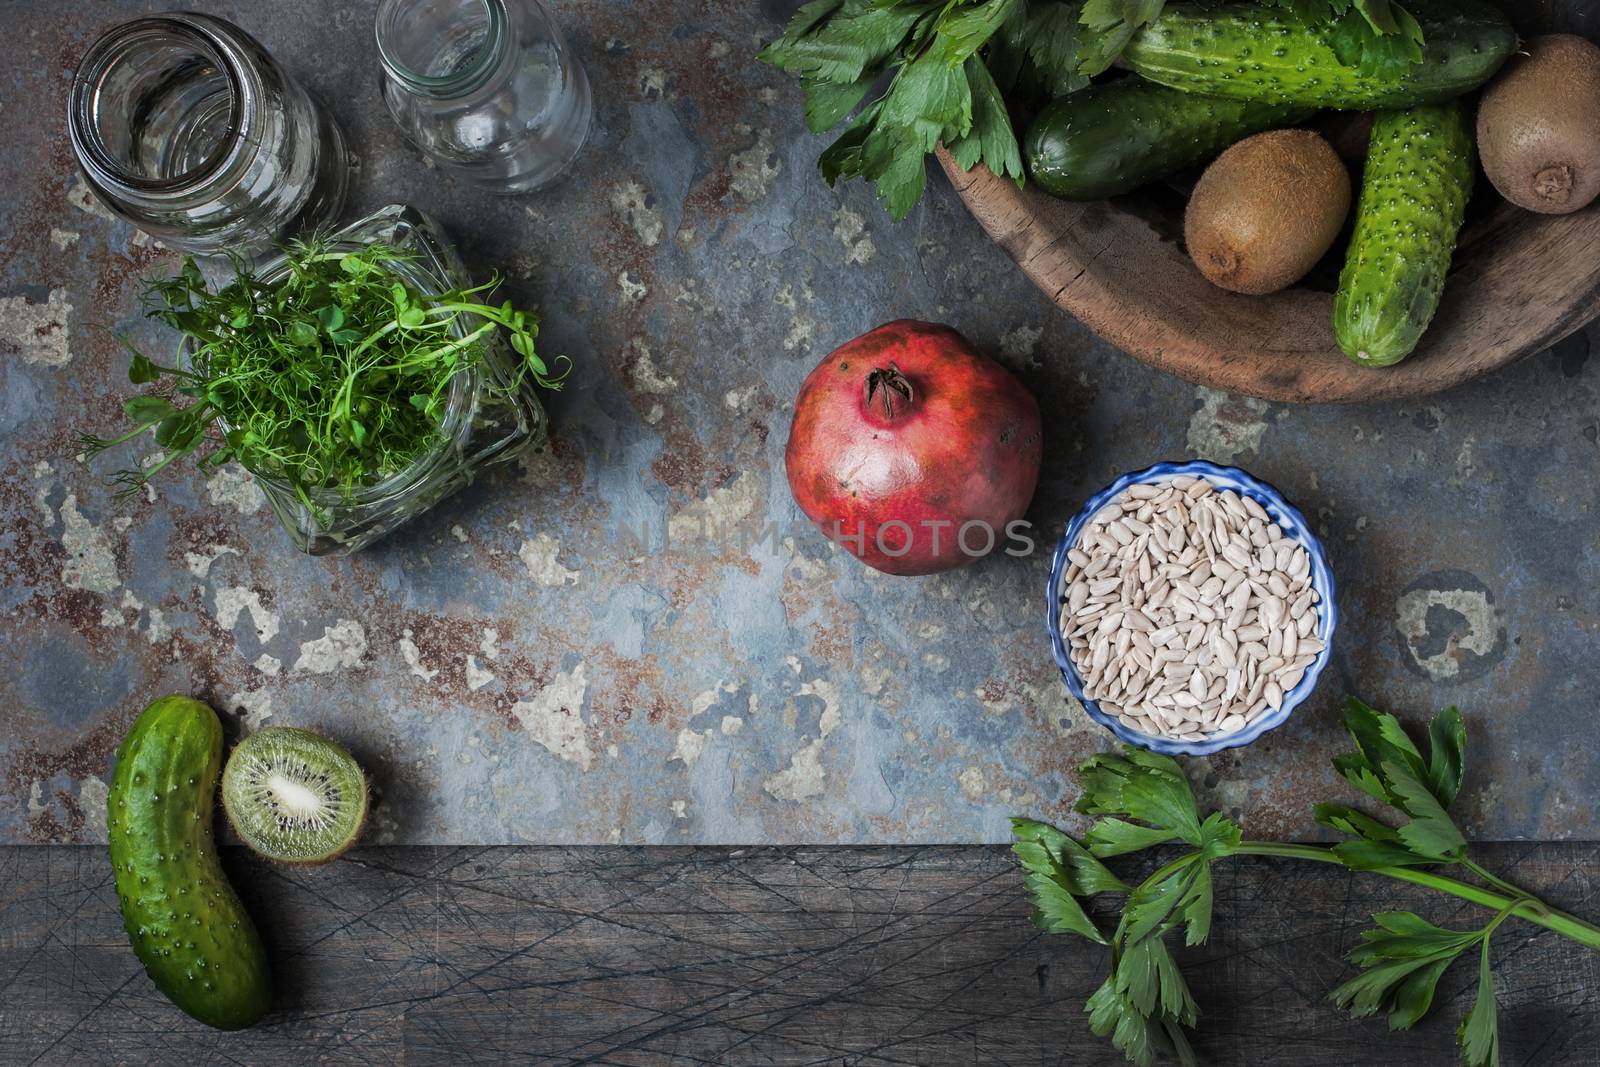 Ingredients for green vegan smoothie by Deniskarpenkov